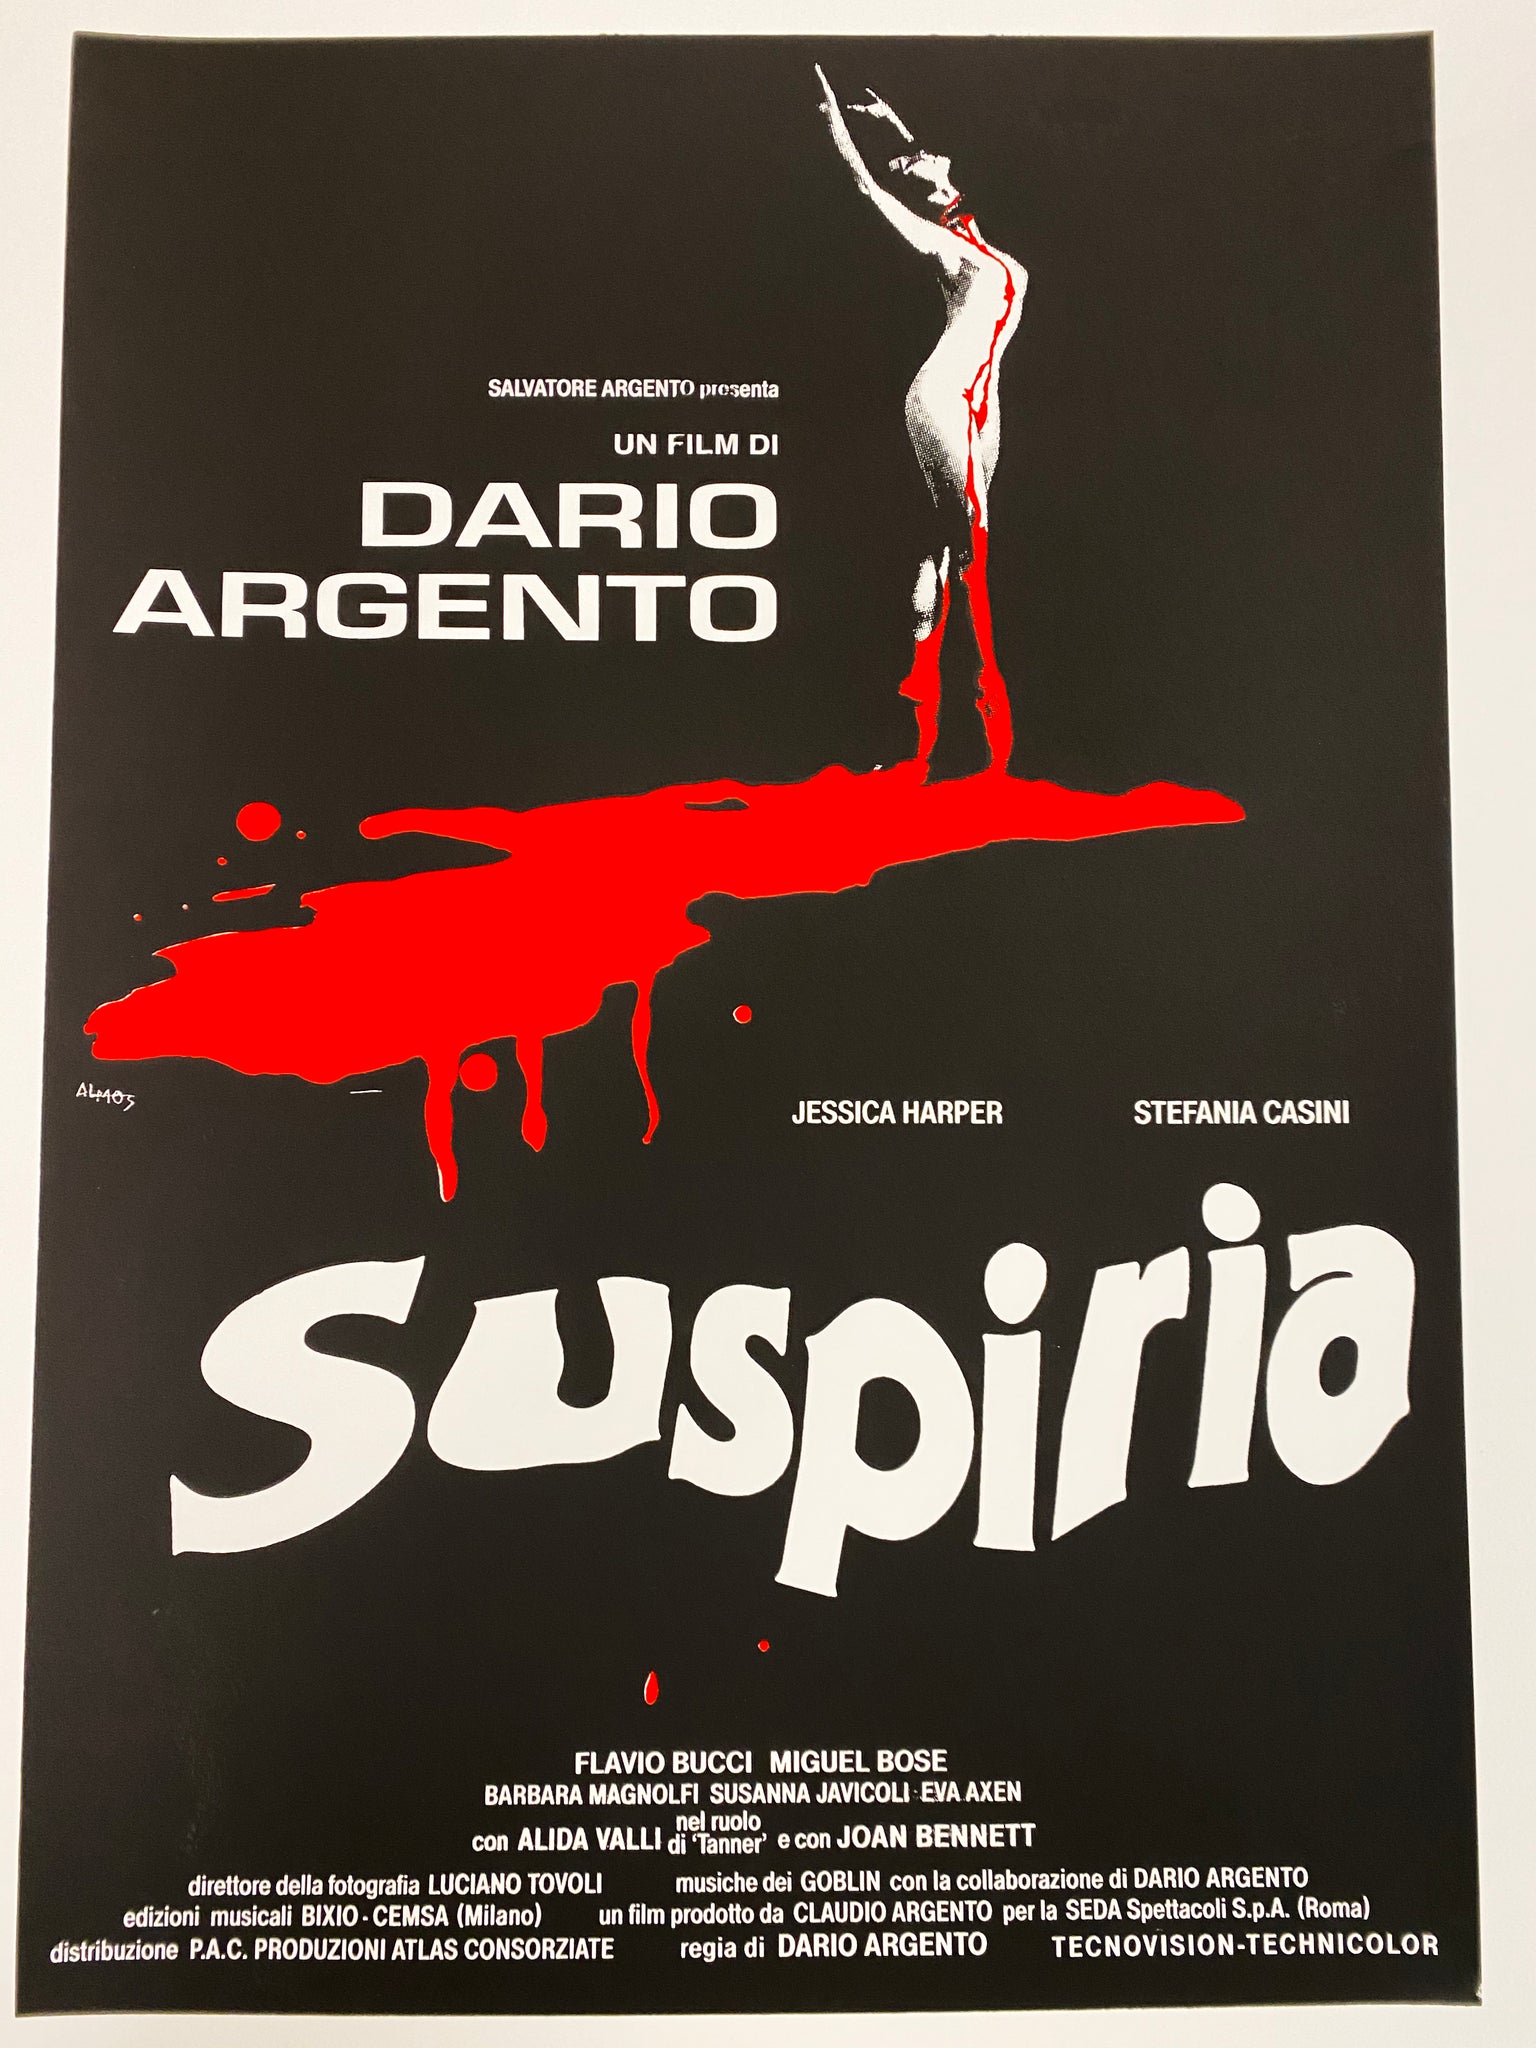 DARIO ARGENTO "SUSPIRIA" LIMITED EDITION SILK SCREENED POSTER